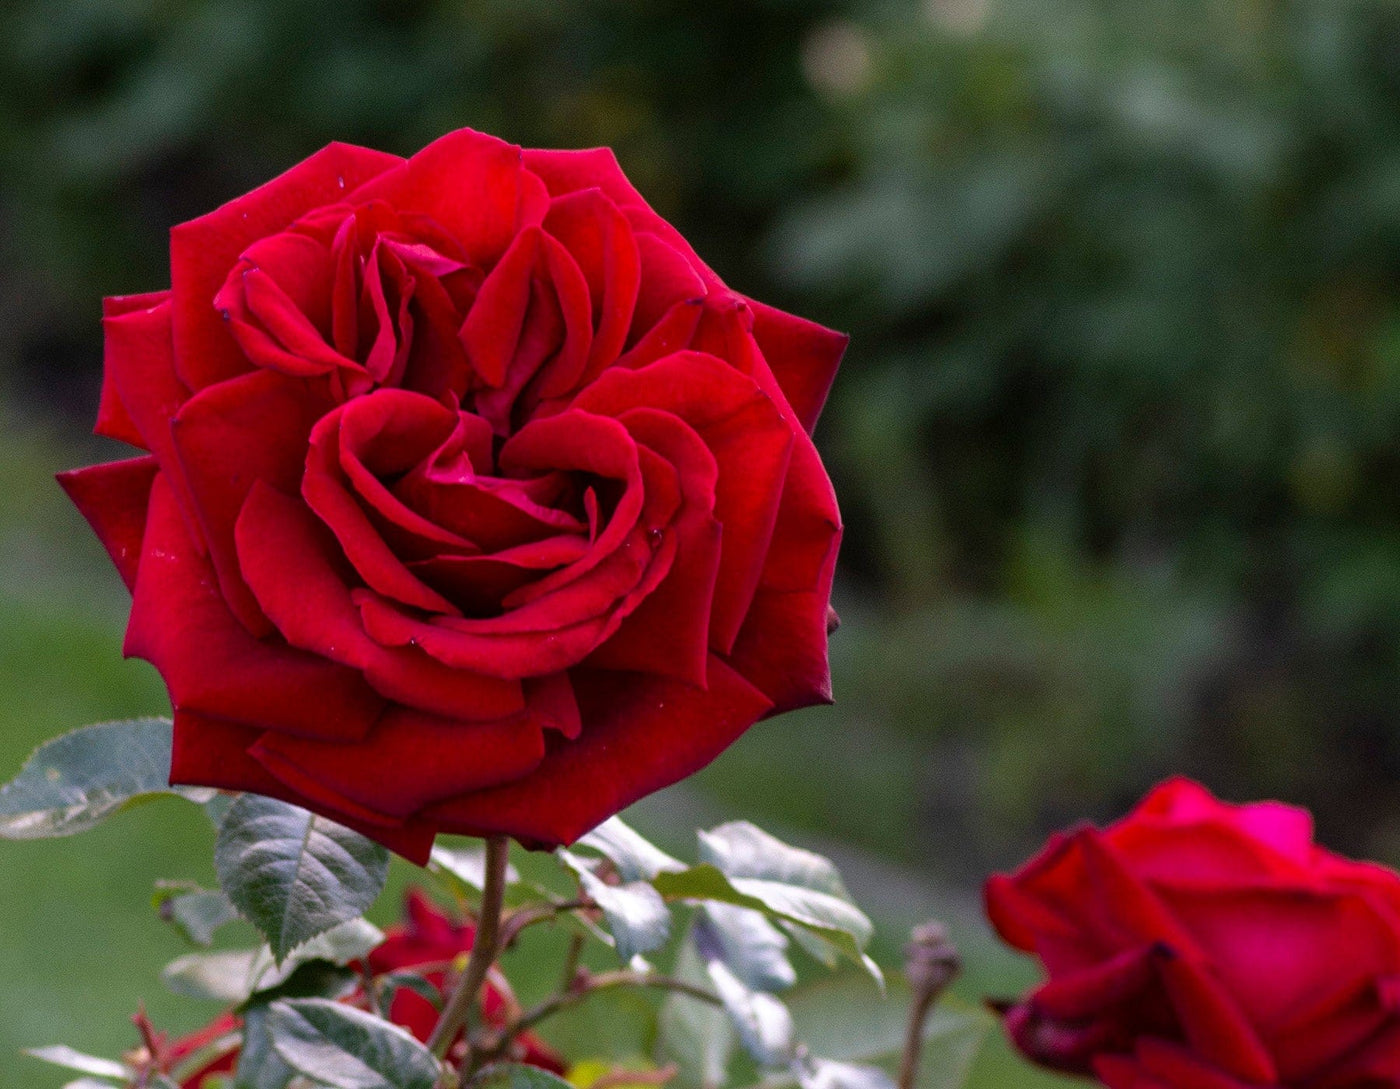 Star Ingrid Bergman - Star Roses and Plants